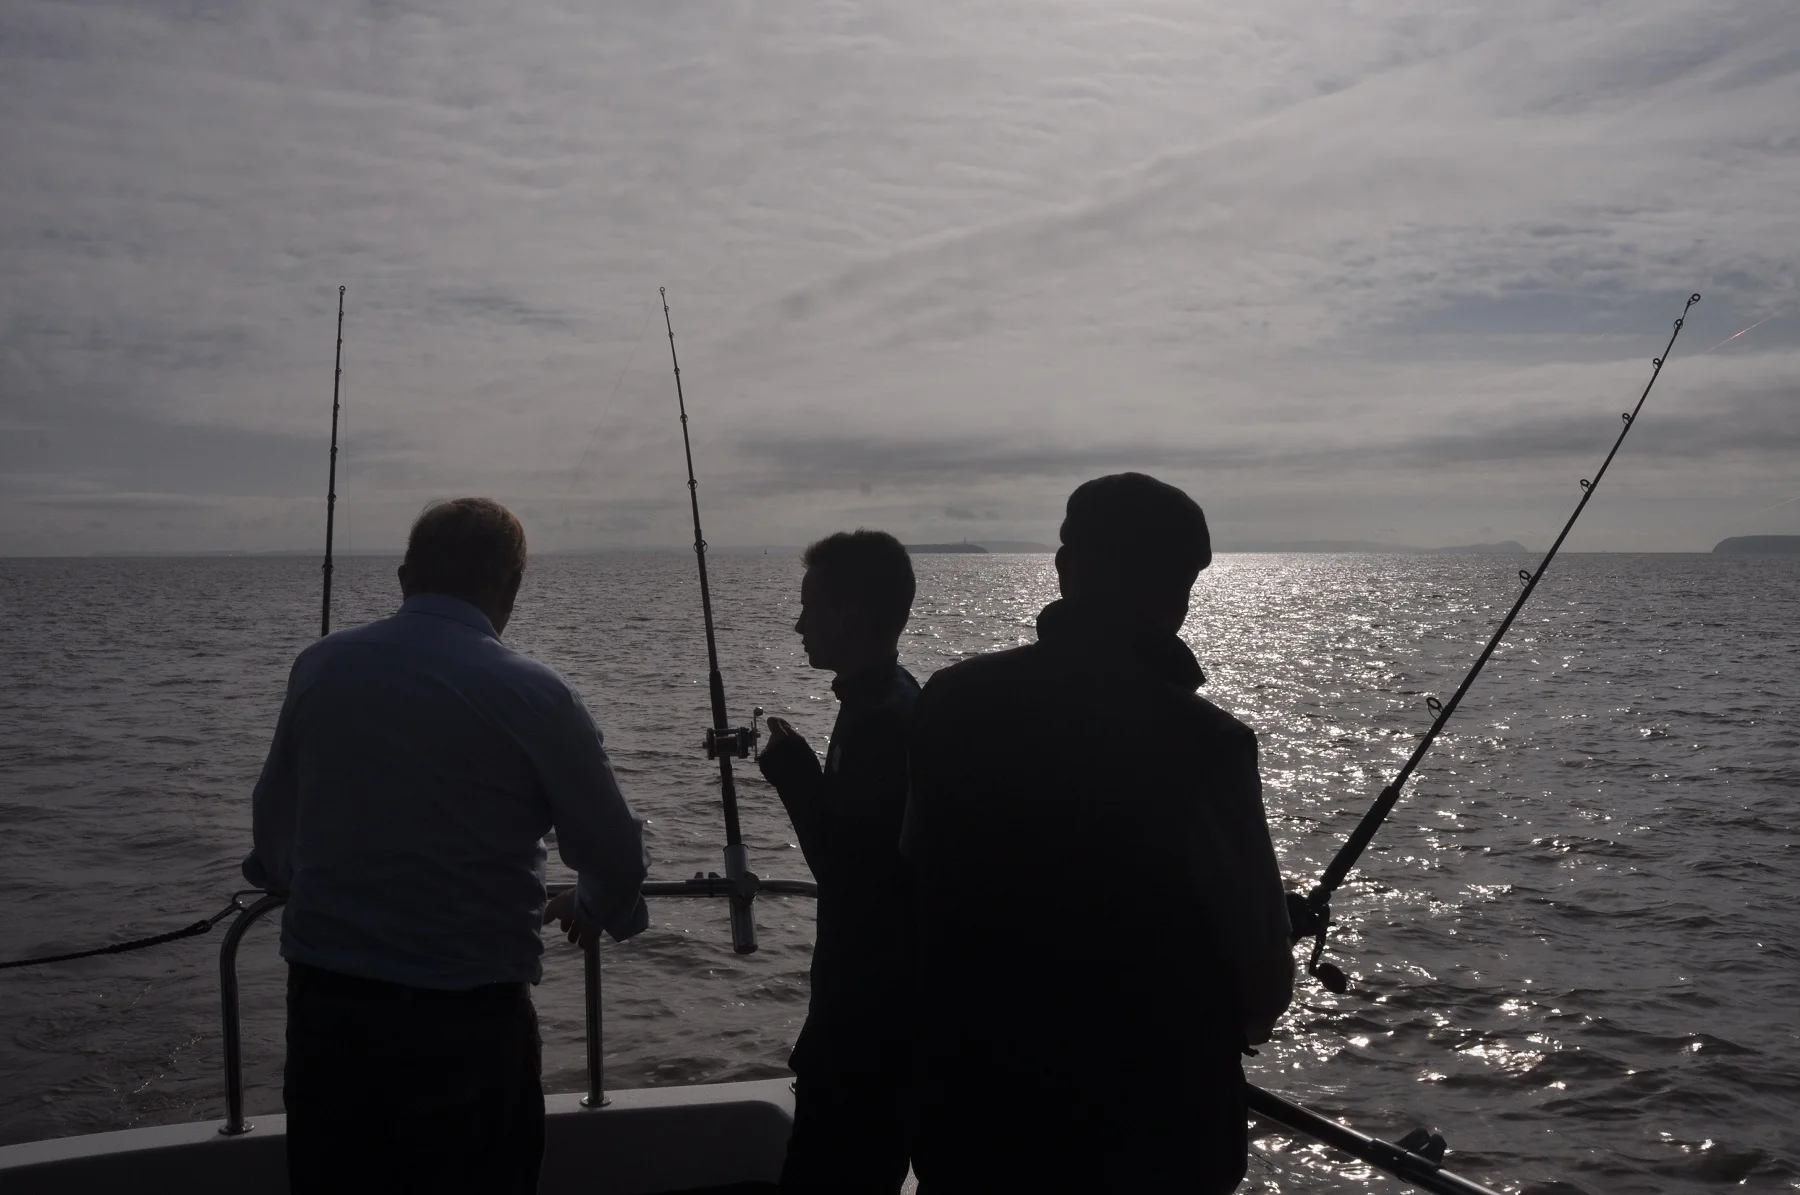 Charter boat fishing Wales